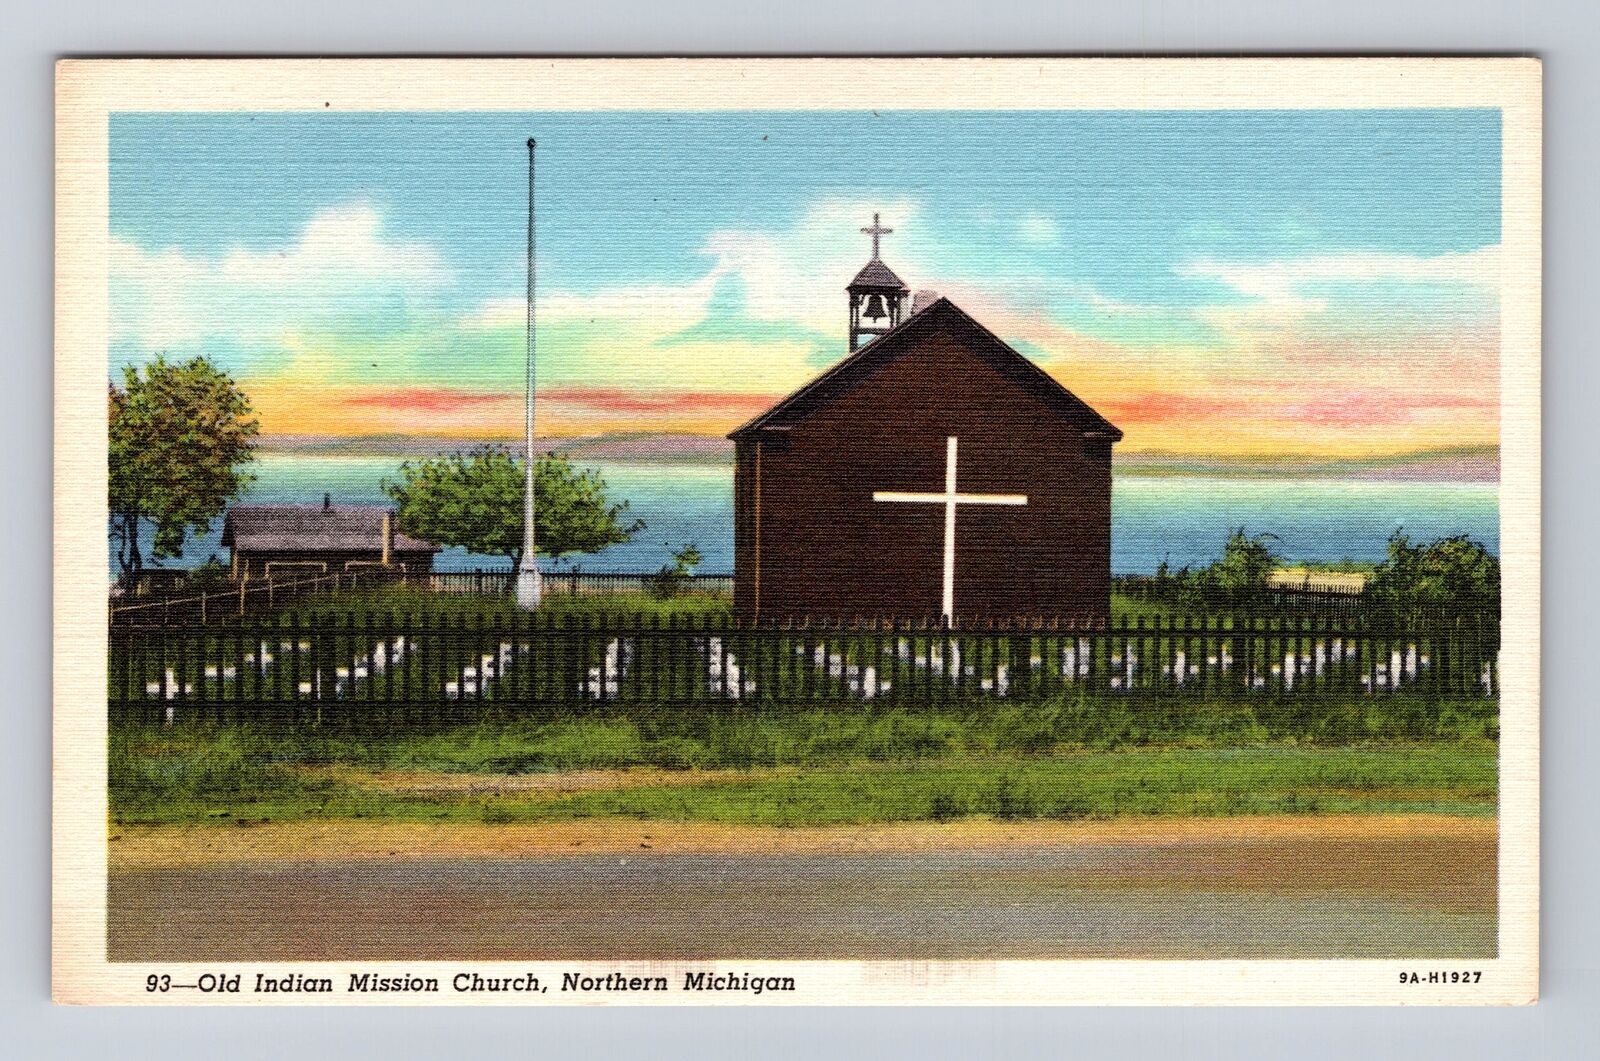 Northern MI-Michigan, Historic Old Indian Mission Church, Vintage Postcard